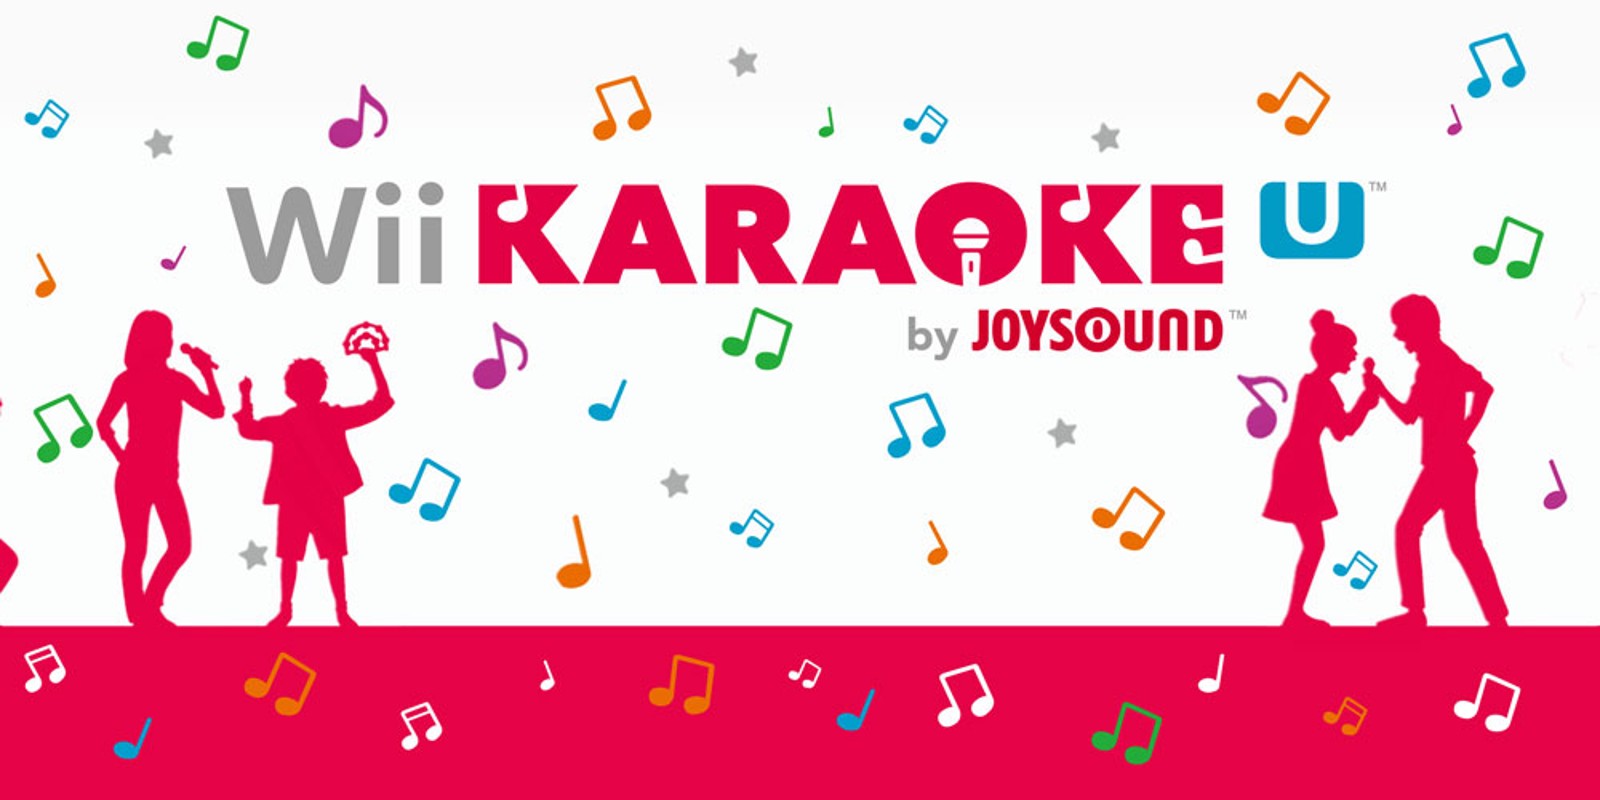 tablero Cristo Asalto Wii Karaoke U by JOYSOUND | Programas descargables Wii U | Juegos | Nintendo